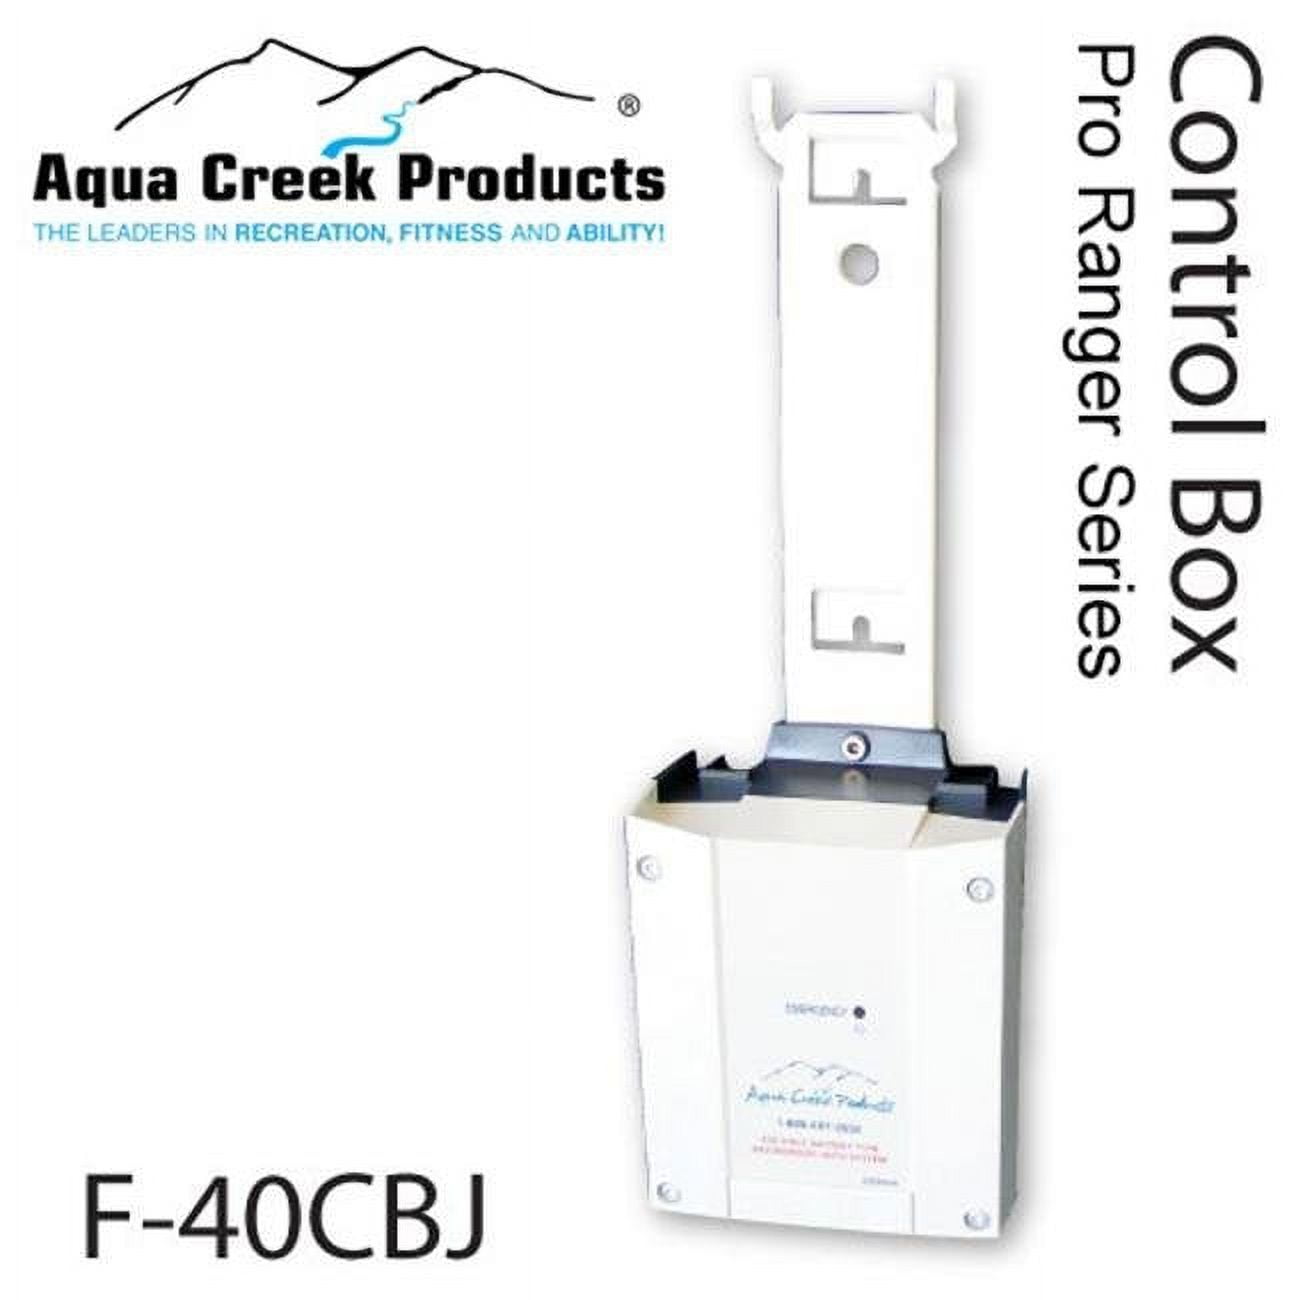 Picture of Aqua Creek Products F-40CBJ Pro & EZ Series Spa Lift Control Replacement Box